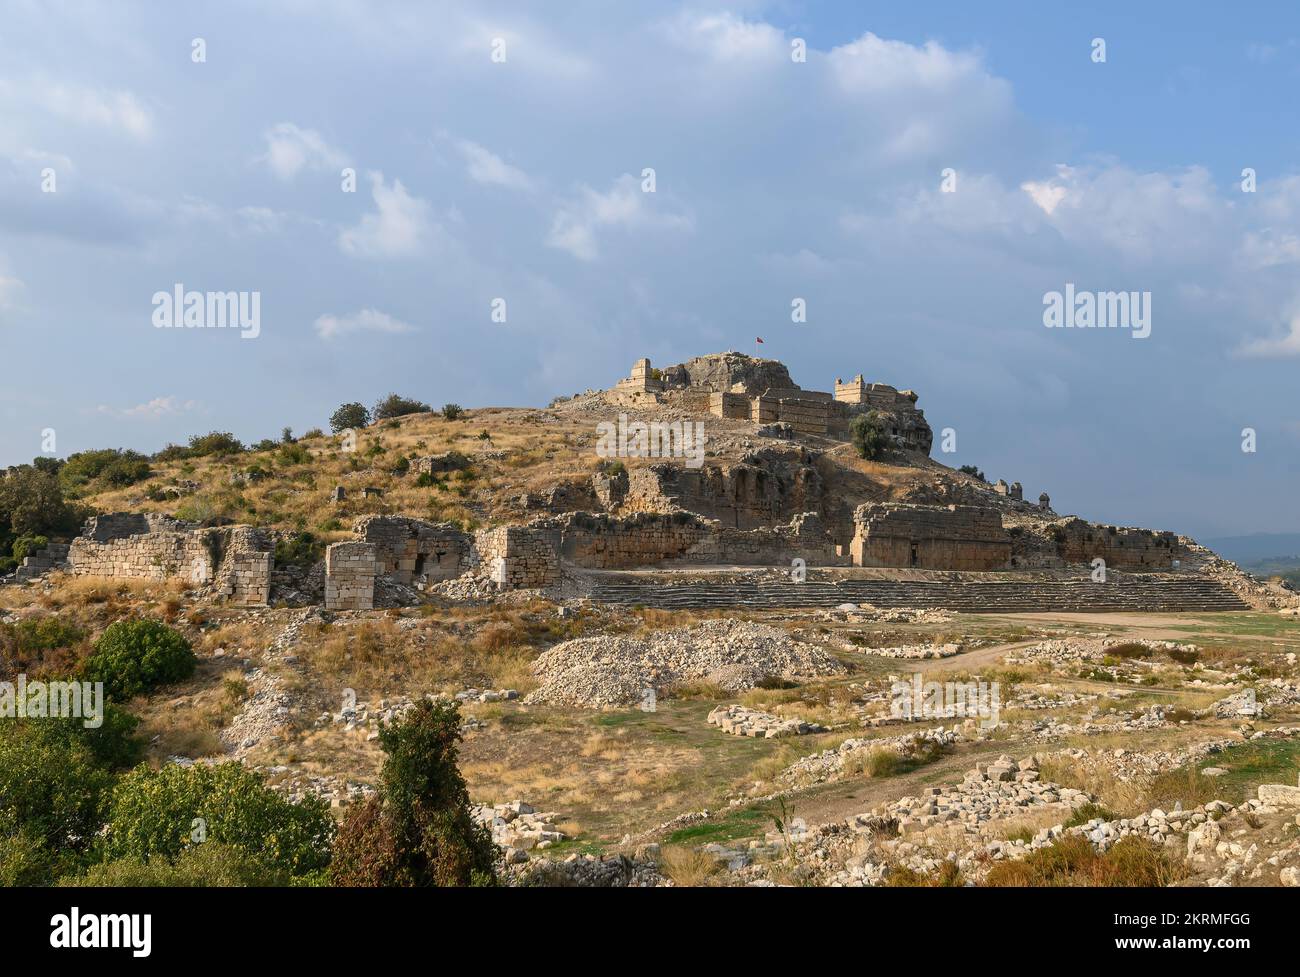 Tlos ruins and tombs, an ancient Lycian city near the town of Seydikemer, Mugla, Turkey. Stock Photo